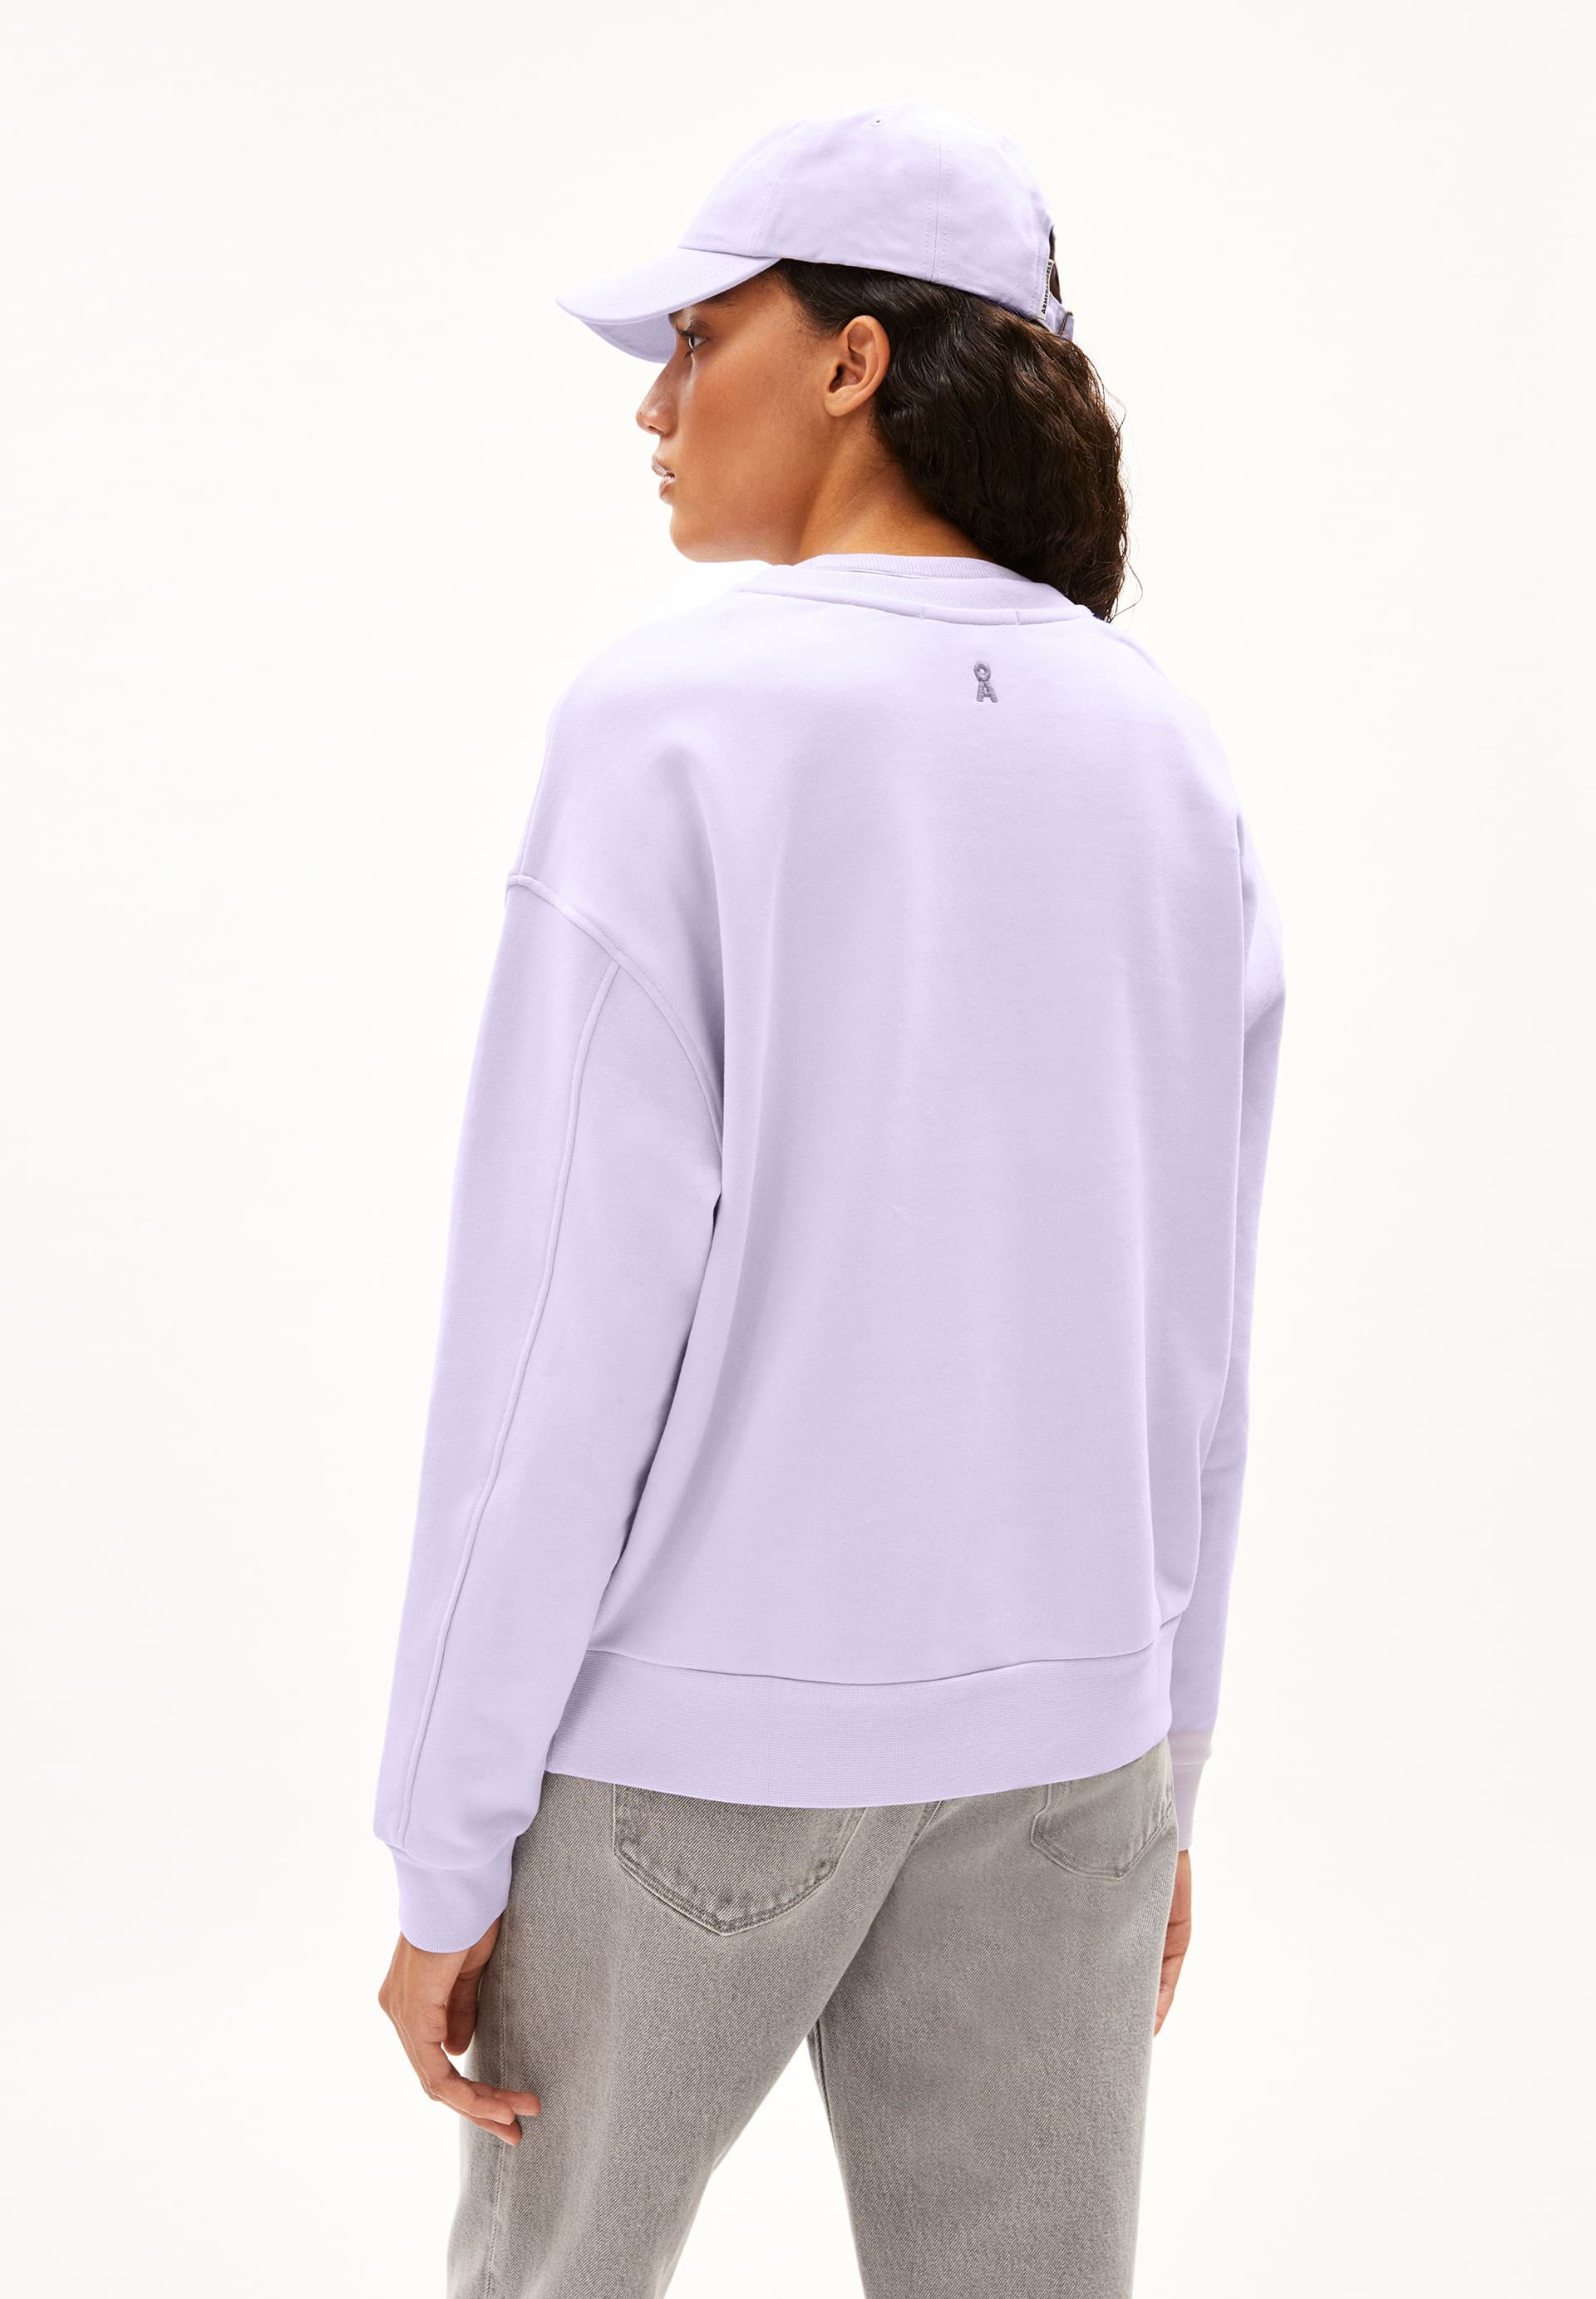 AARIN Sweatshirt Oversized Fit aus Bio-Baumwolle